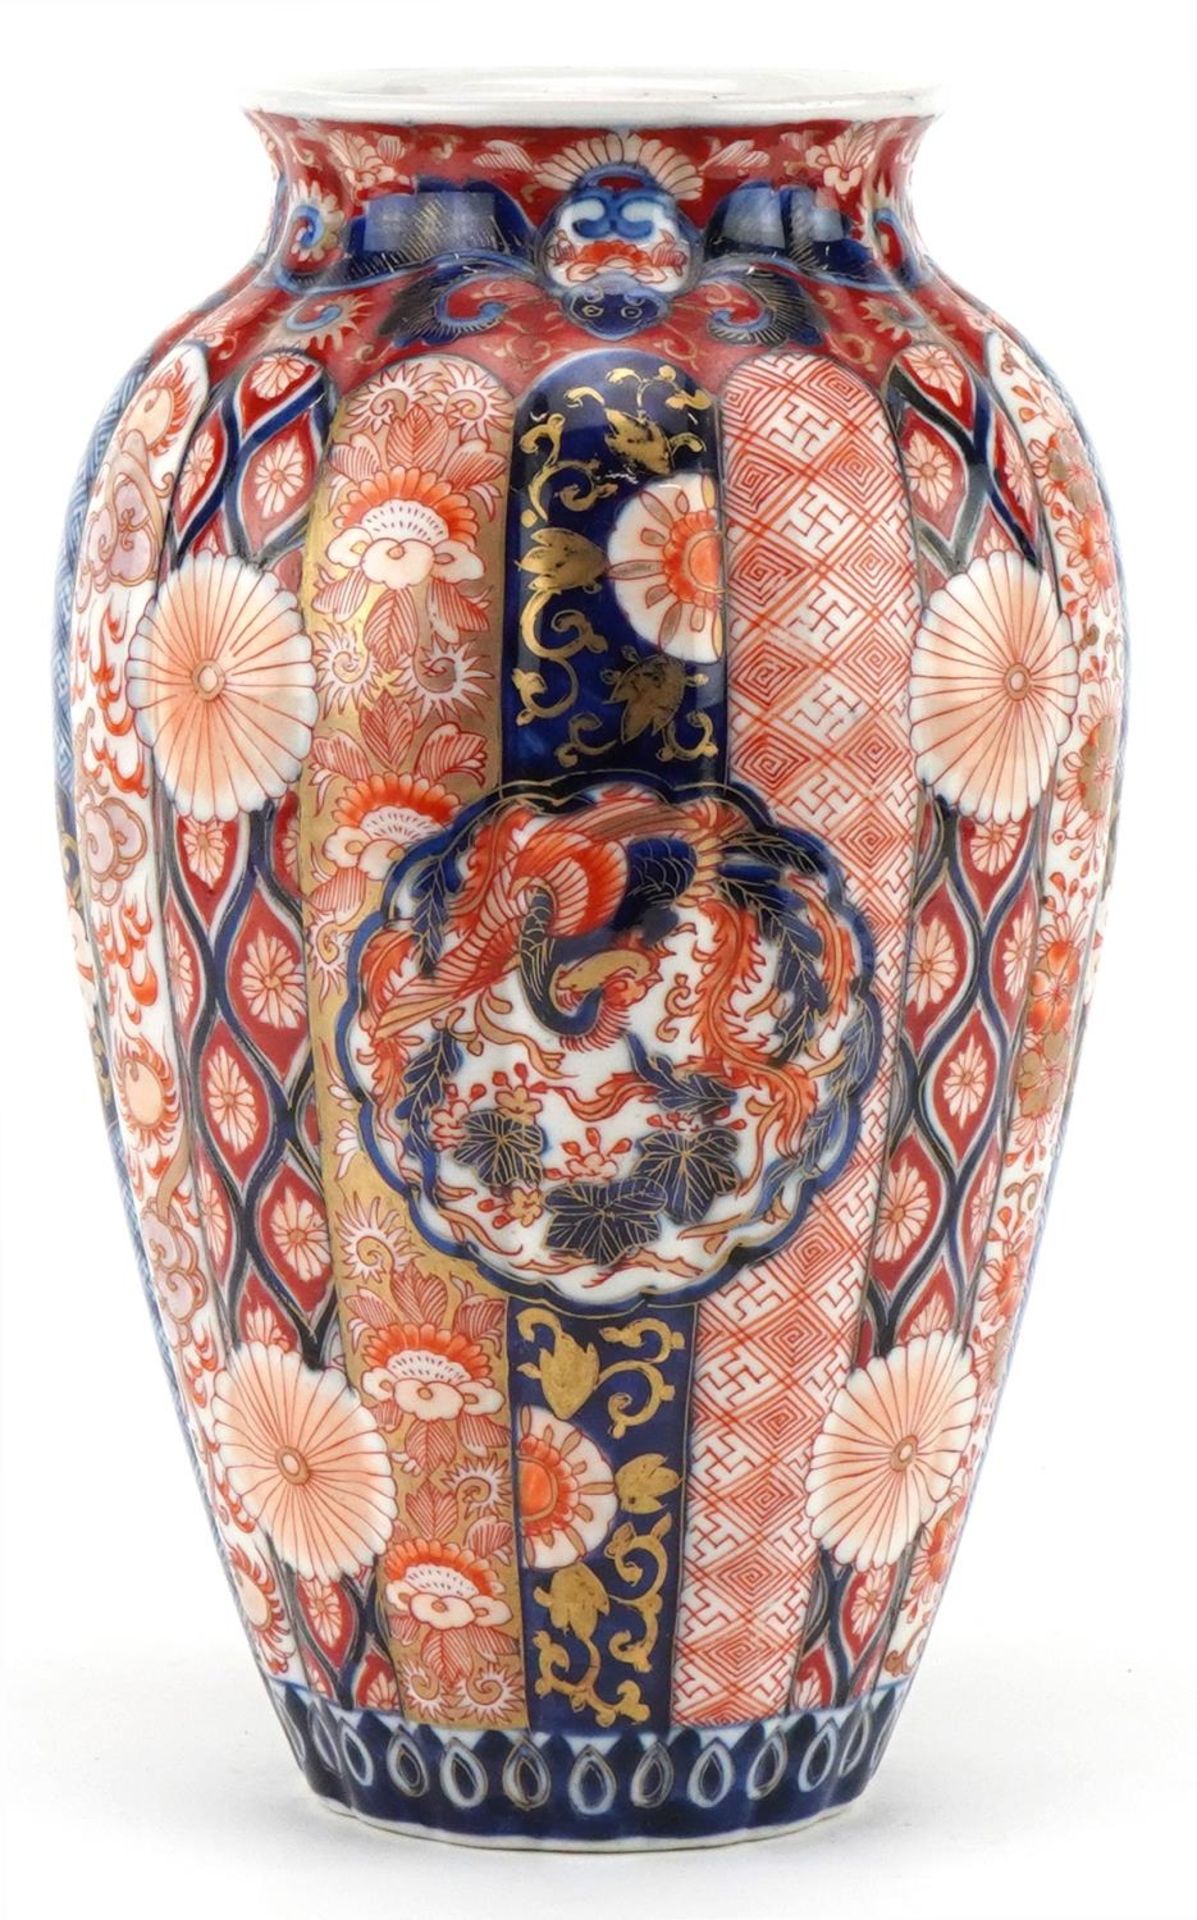 Japanese Imari porcelain fluted vase hand painted with flowers and stylised roundels enclosing